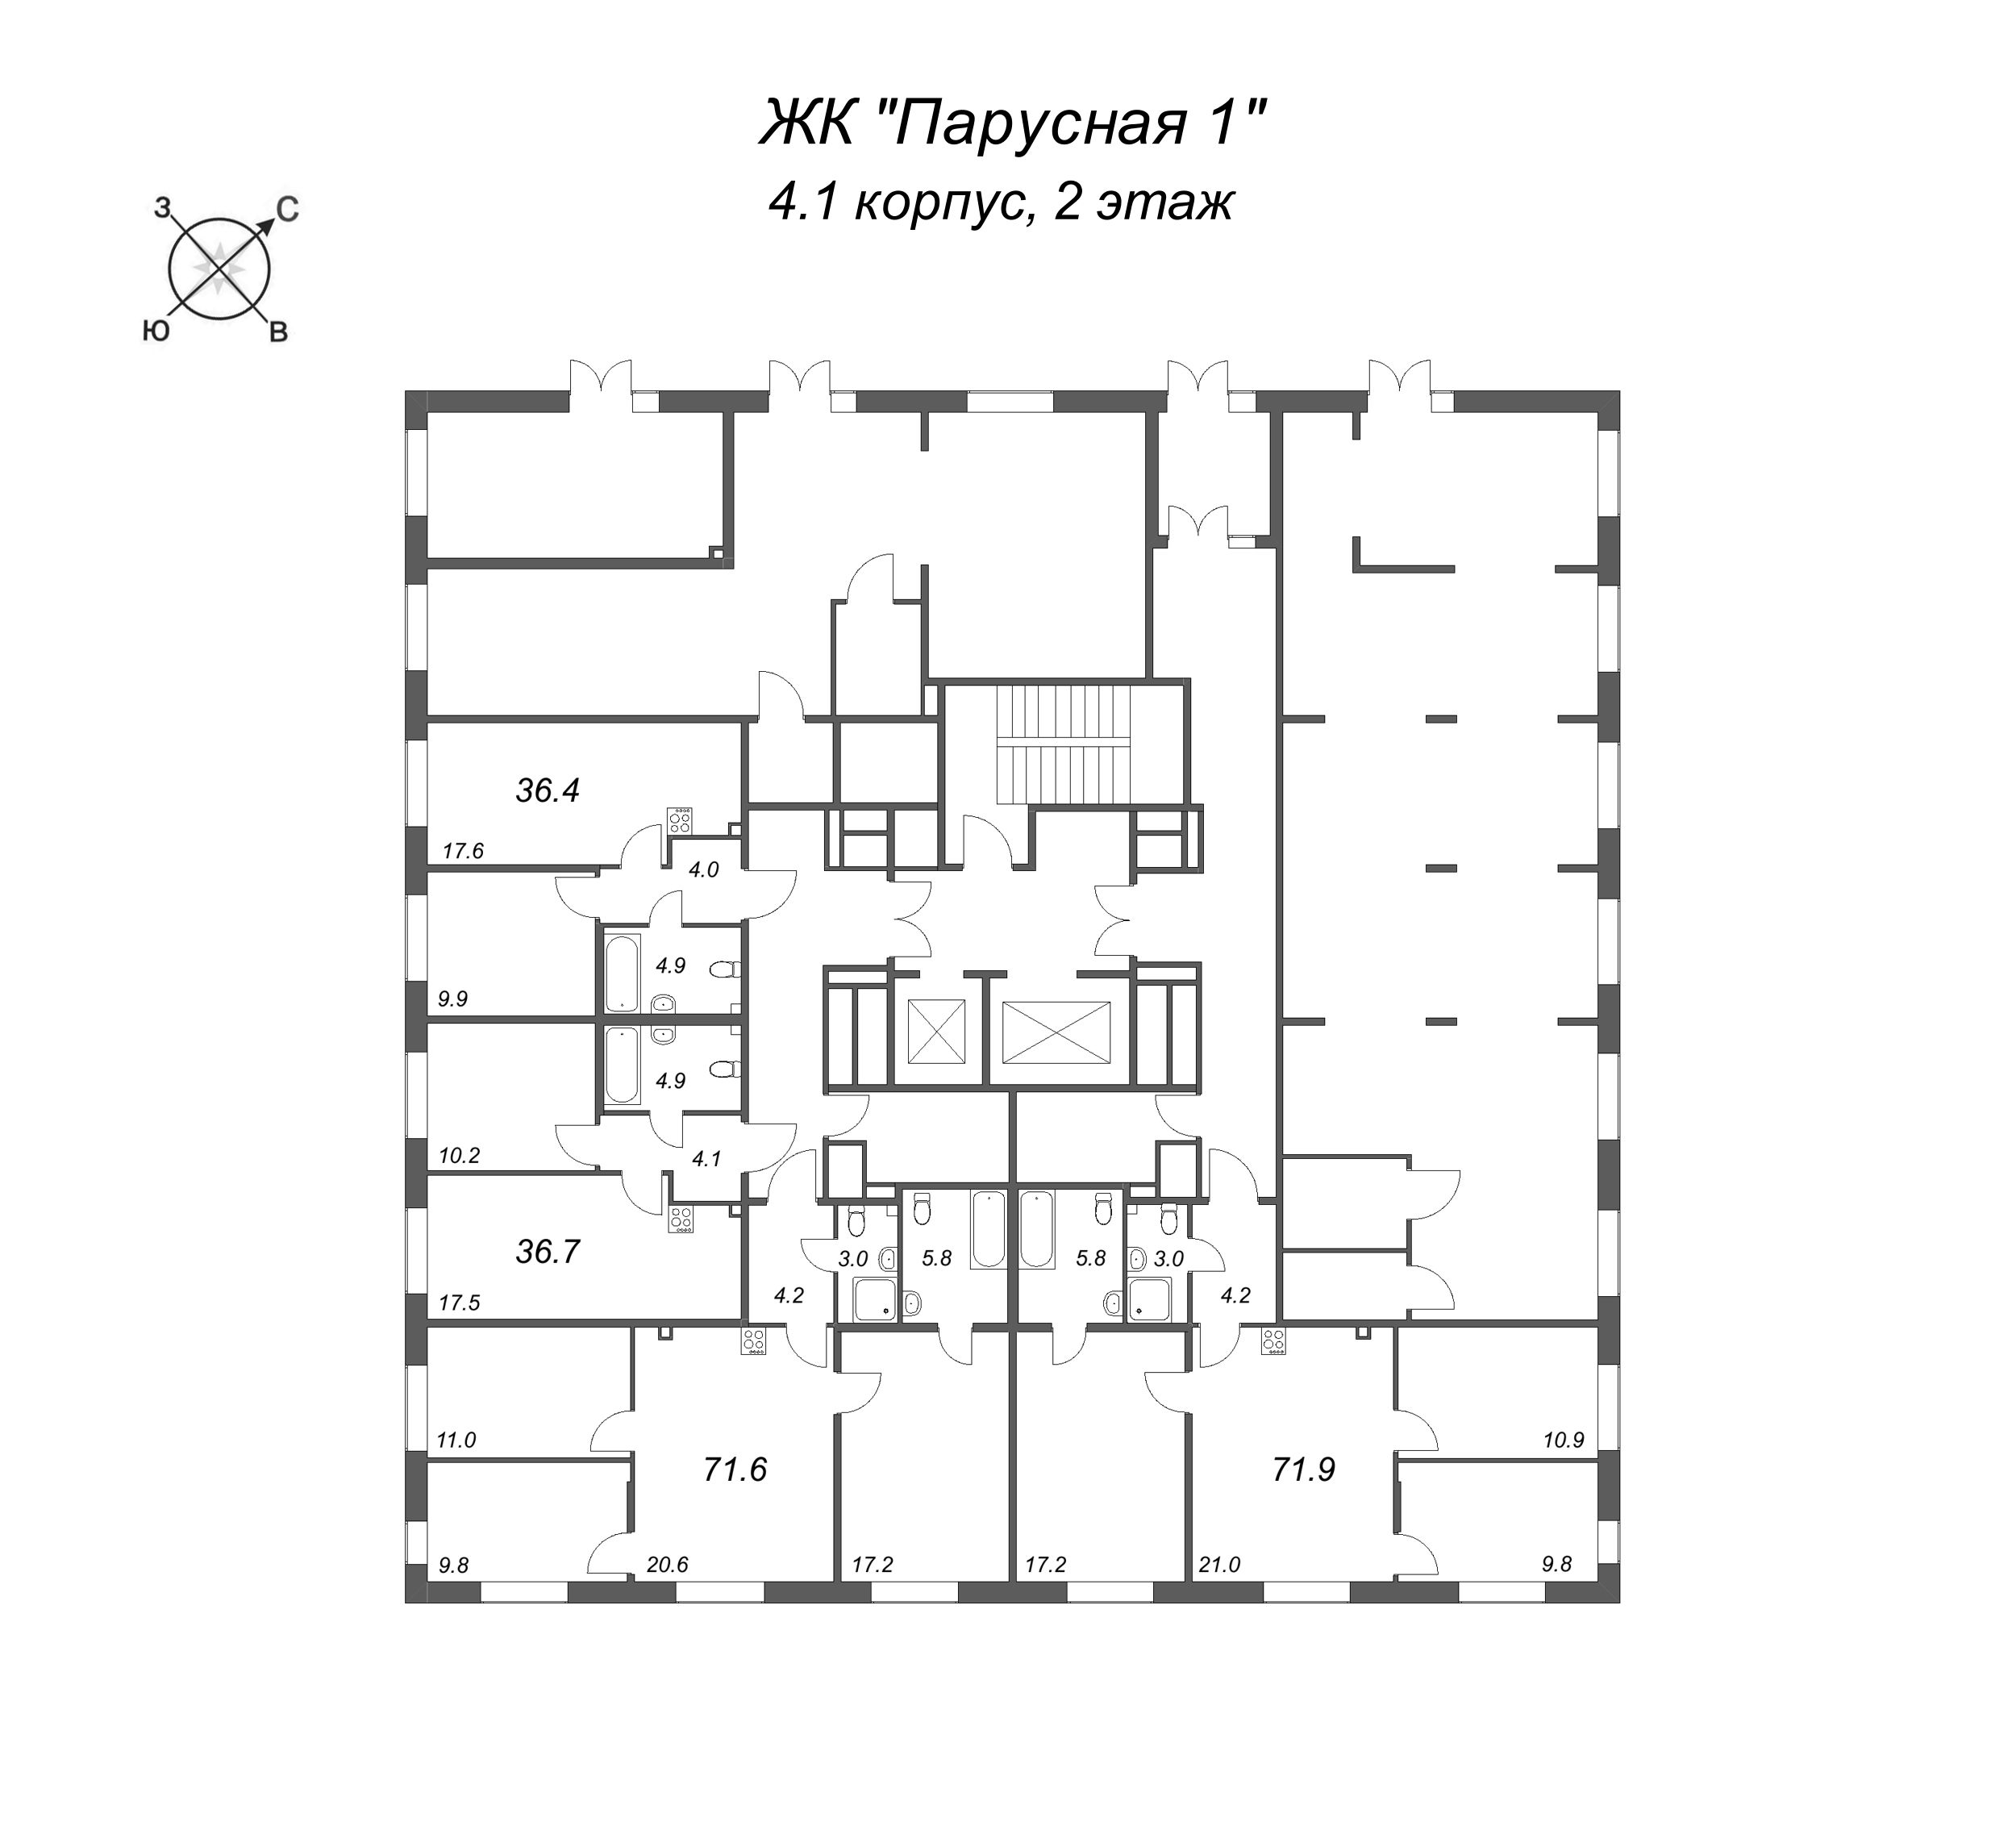 4-комнатная (Евро) квартира, 71.6 м² - планировка этажа